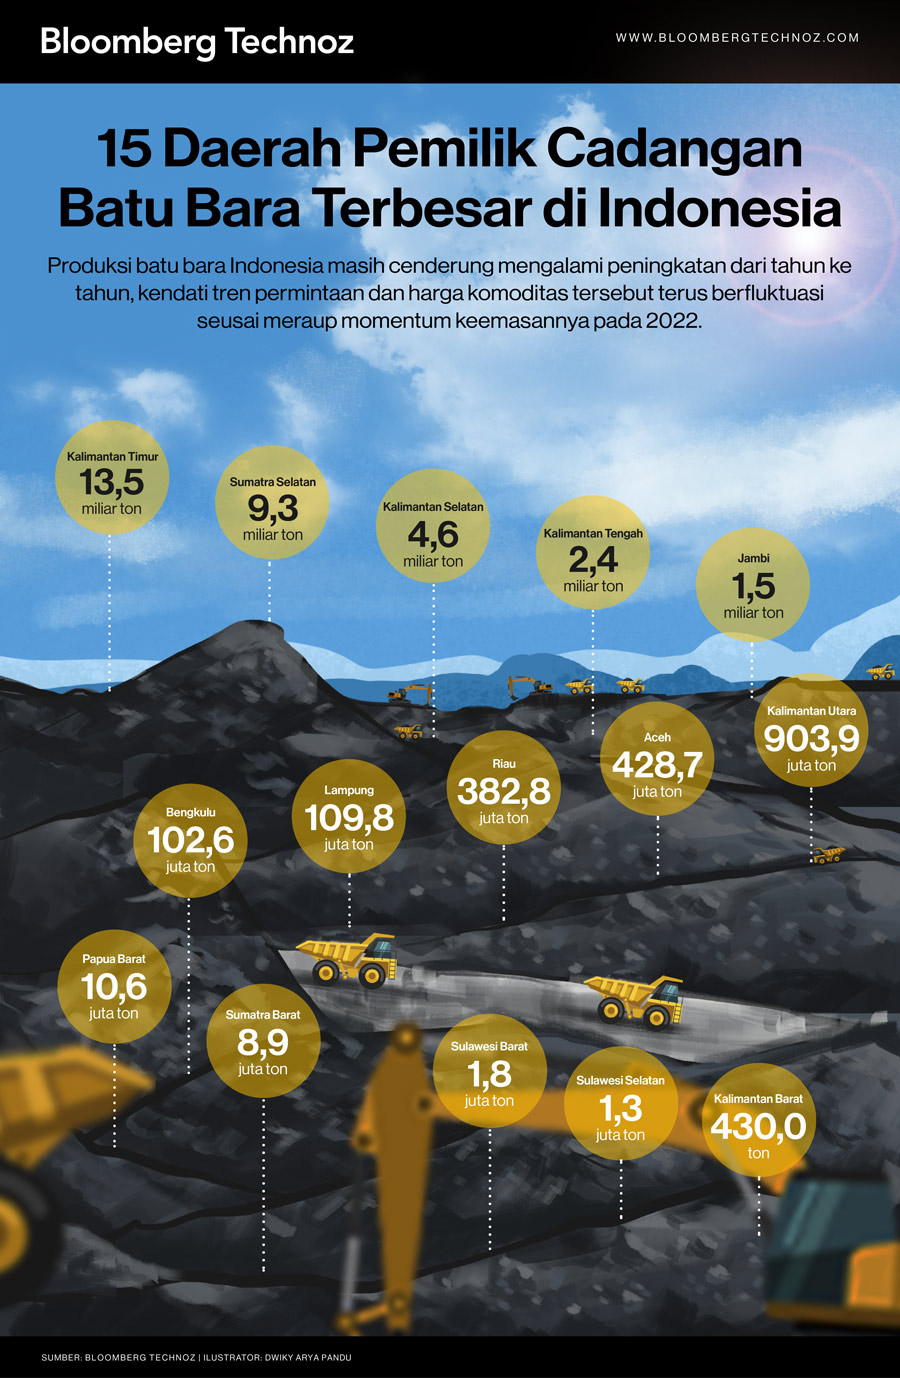 15 Daerah Pemilik Cadangan Batu Bara Terbesar di Indonesia (Infografis/Bloomberg Technoz)